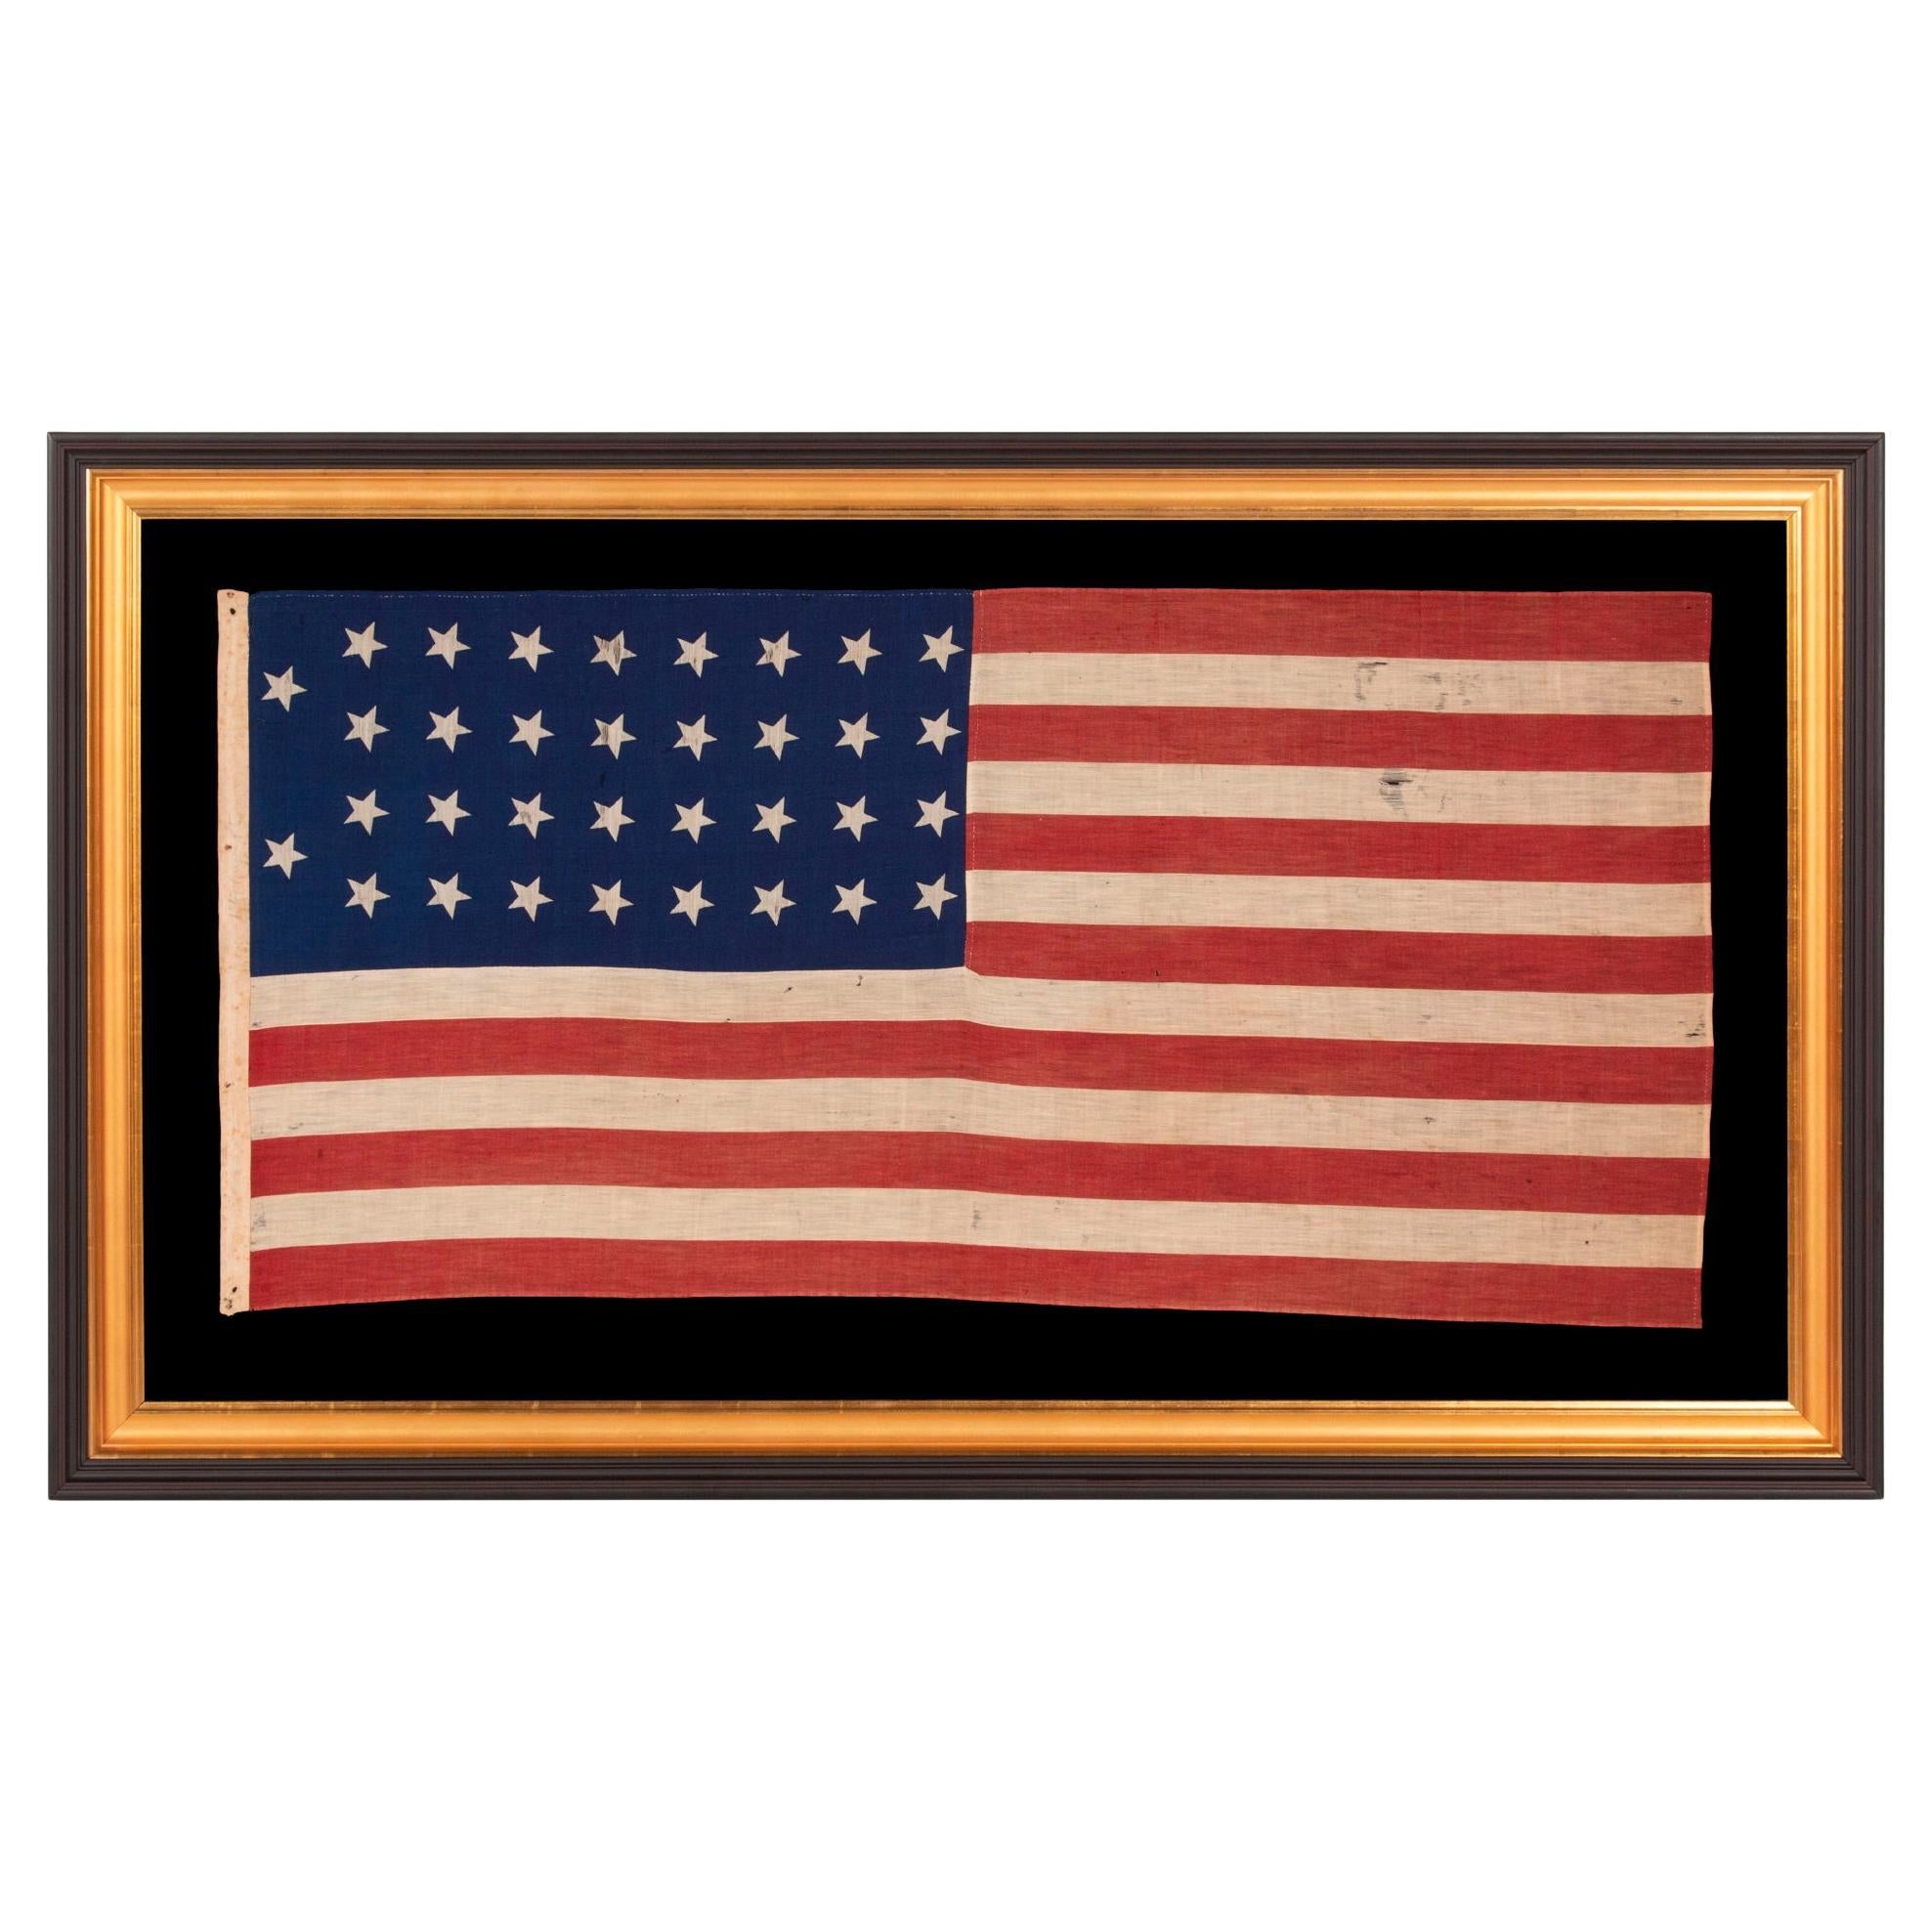 34 STAR AMERICAN FLAG, CIVIL WAR PERIOD, 1861-63, a RARE STYLE, KANSAS STATEHOOD